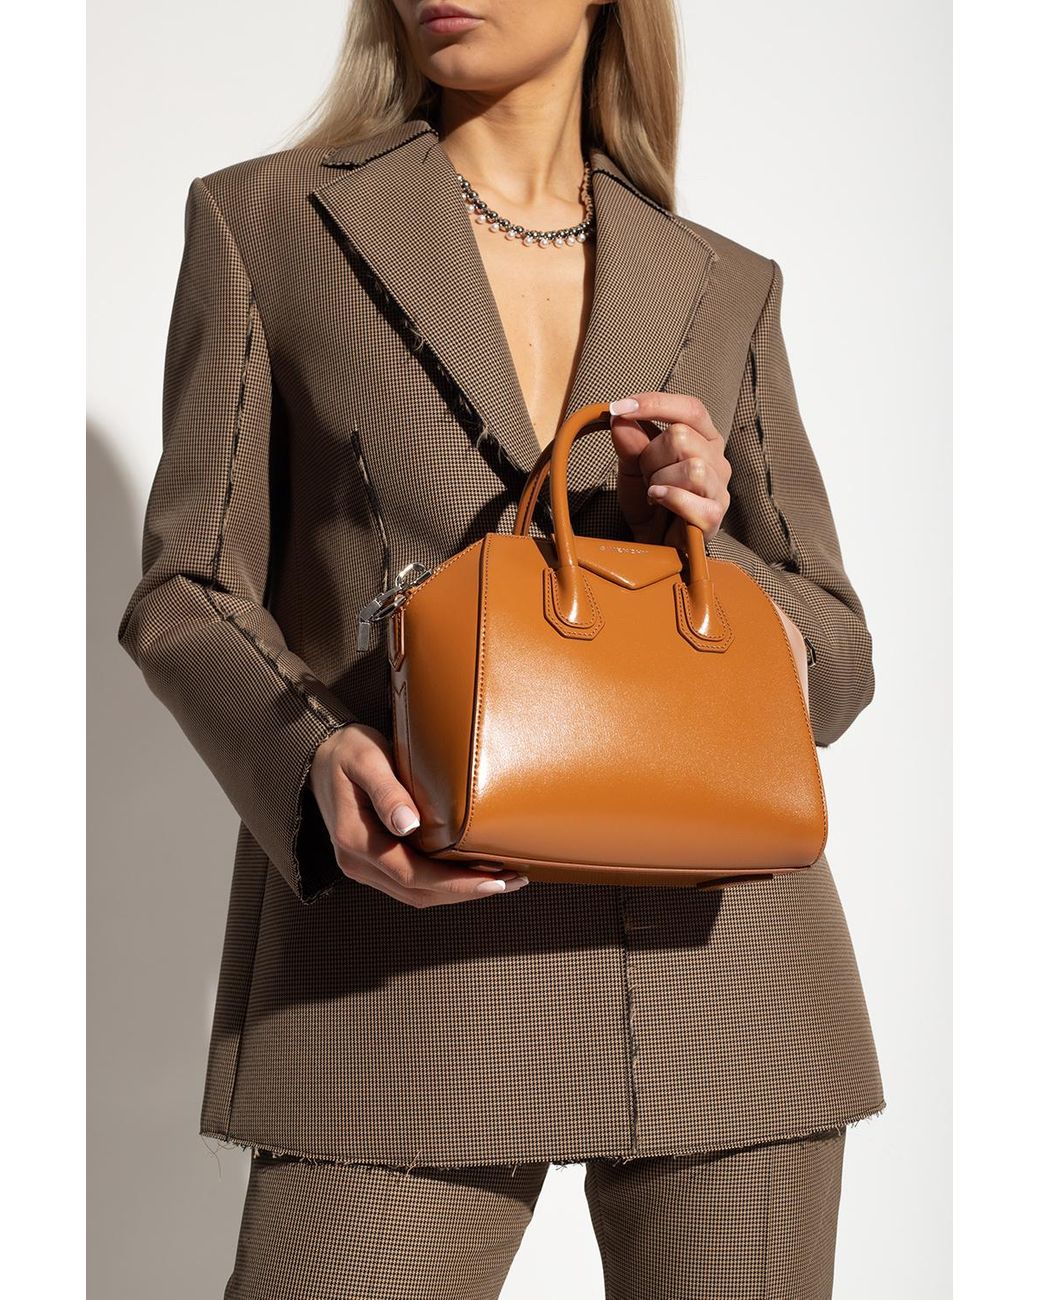 GIVENCHY Antigona Mini Calfskin Leather Shoulder Bag Black-US